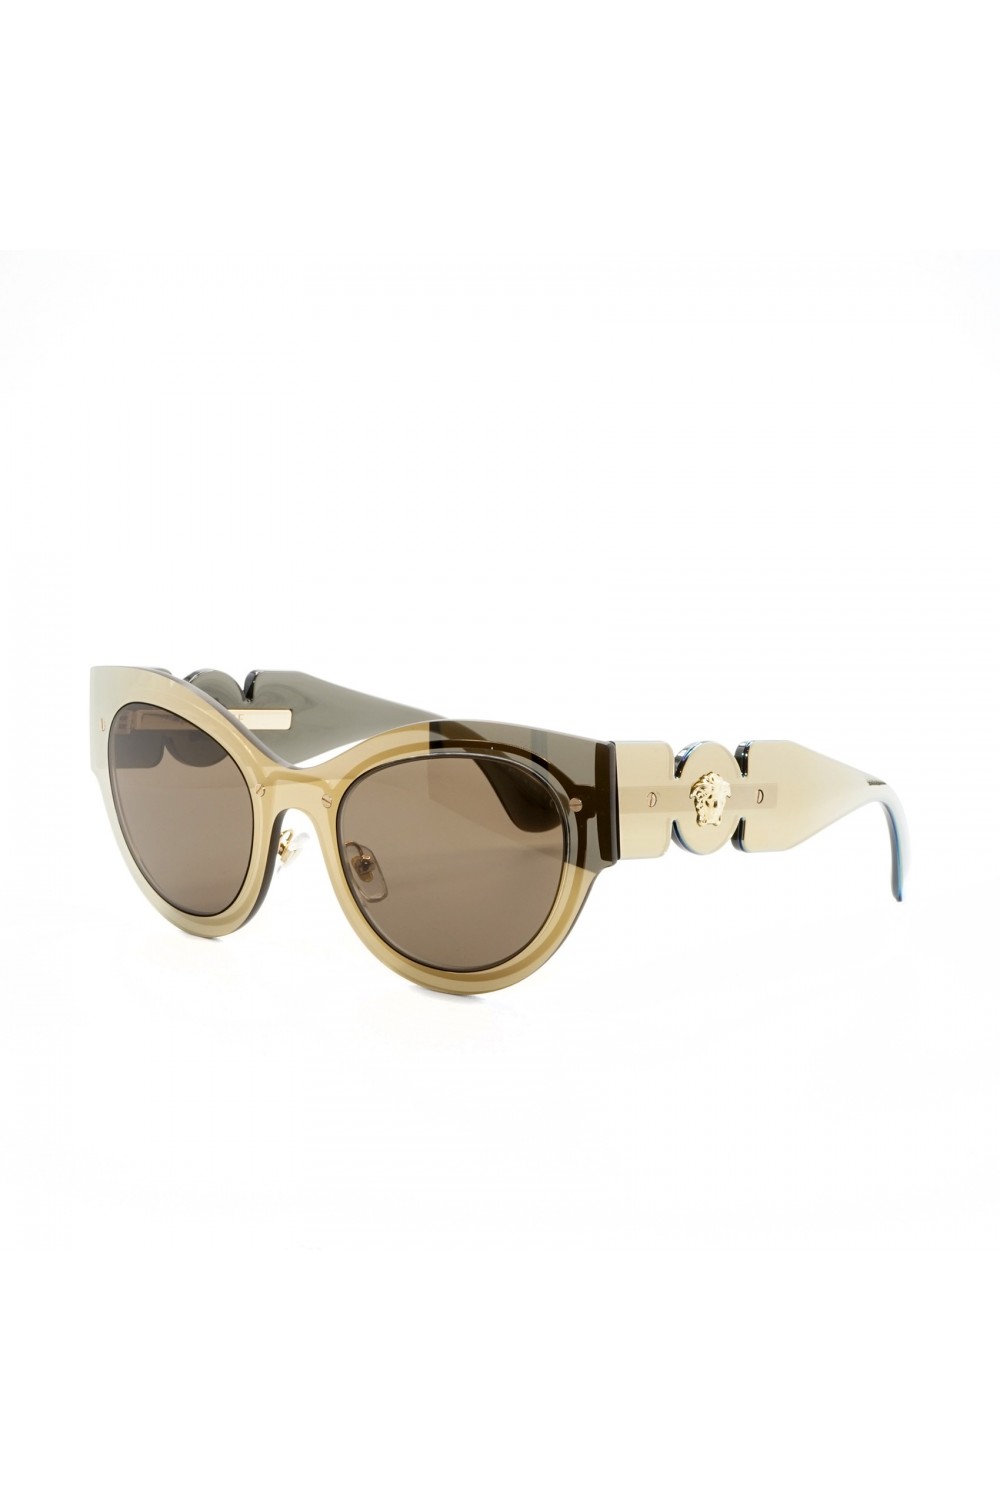 Versace - Occhiali da sole in plastica cat eye per donna oro - 2234 1002/3